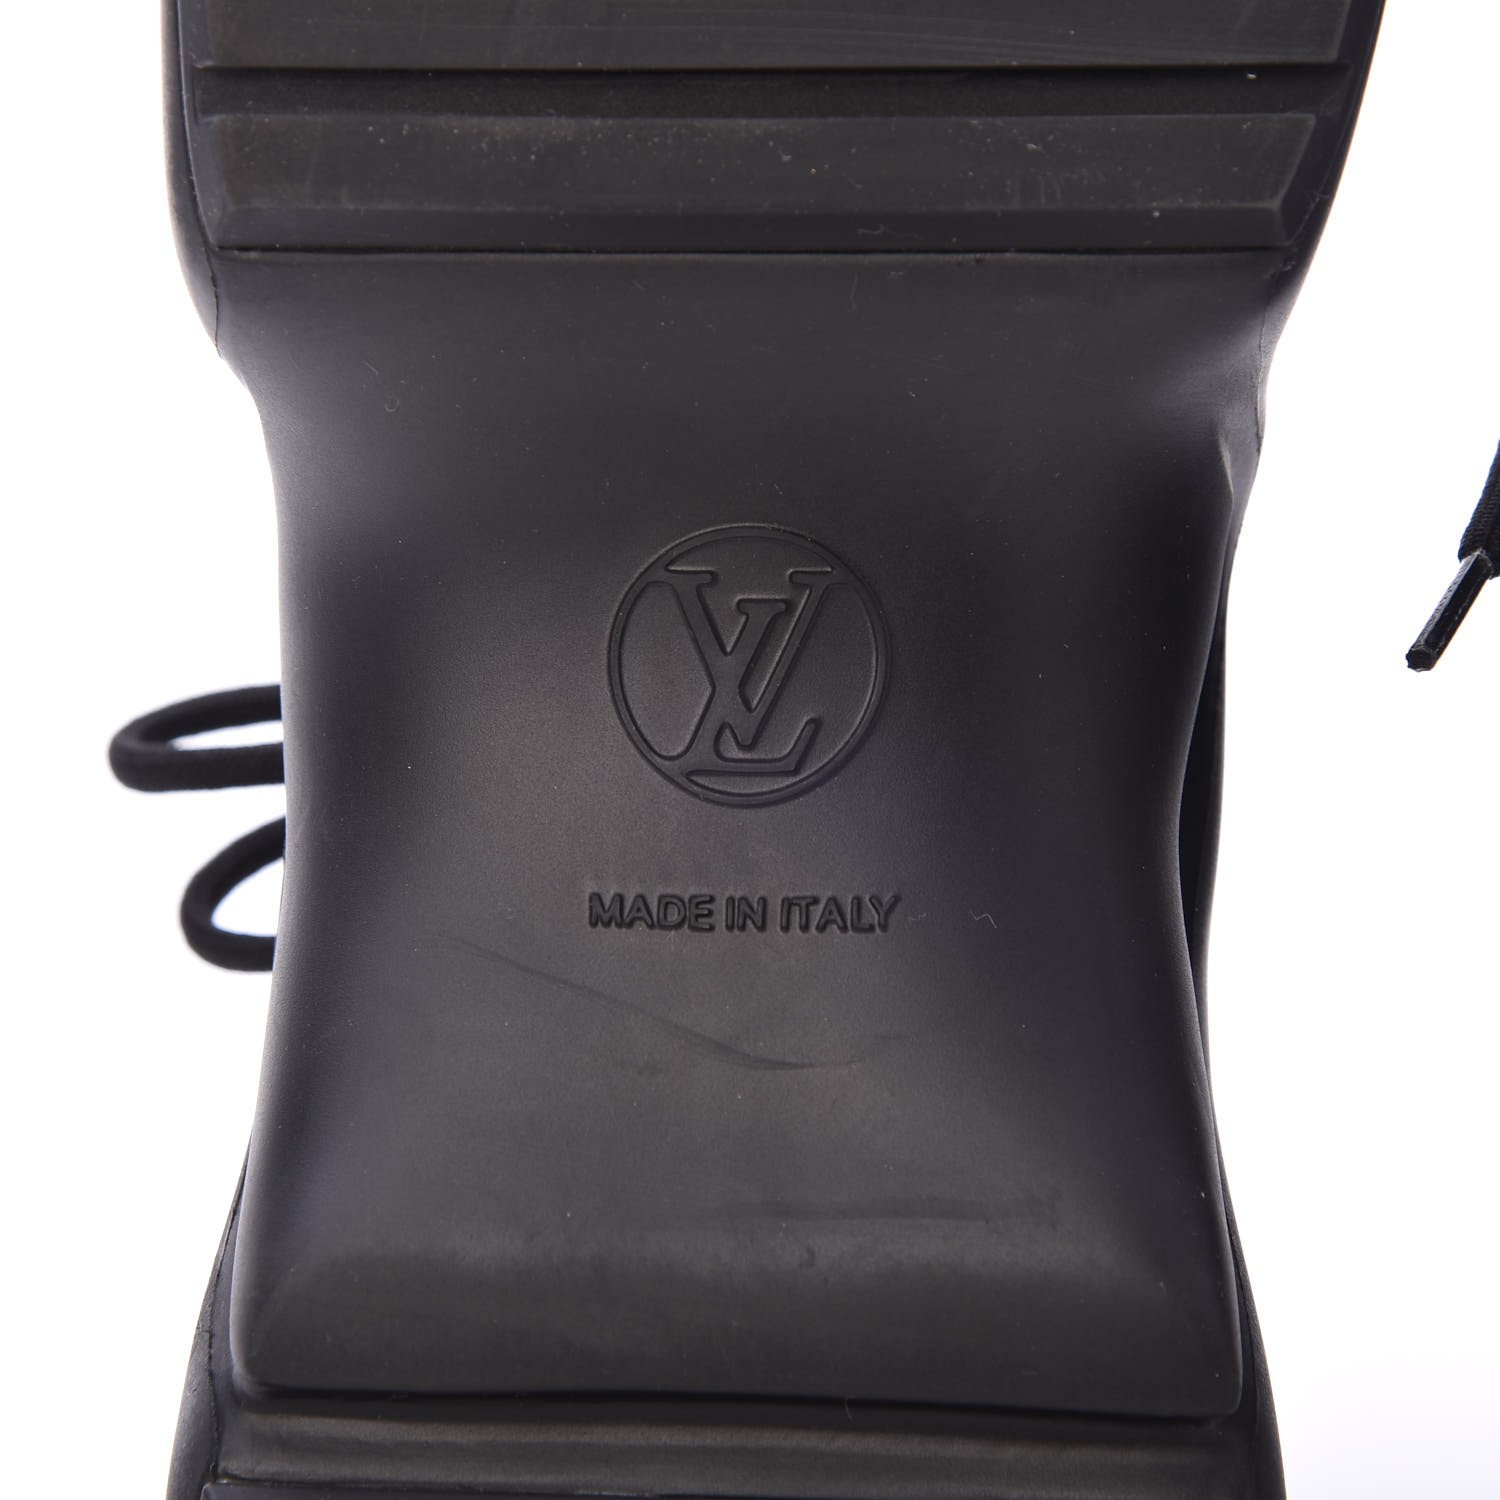 LOUIS VUITTON Calfskin Technical Nylon LV Archlight Sneaker 37